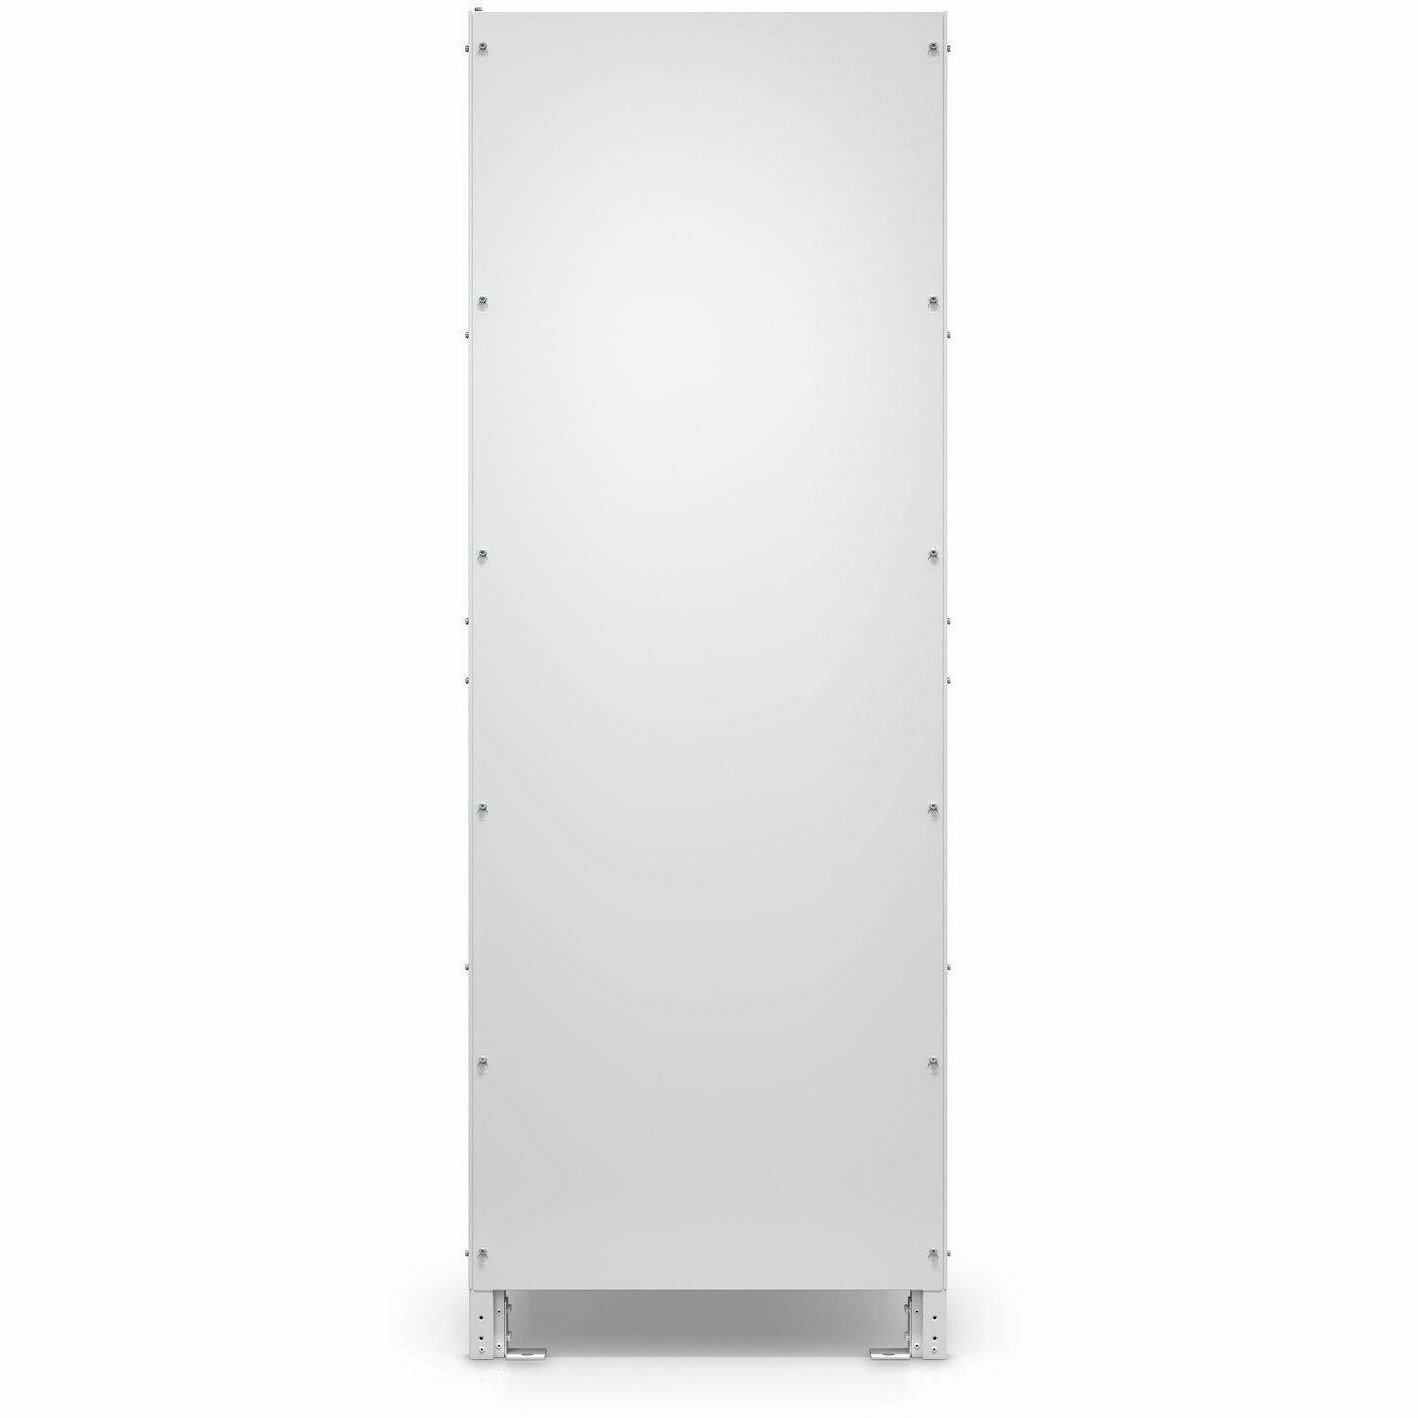 Schneider Electric Power Array Cabinet